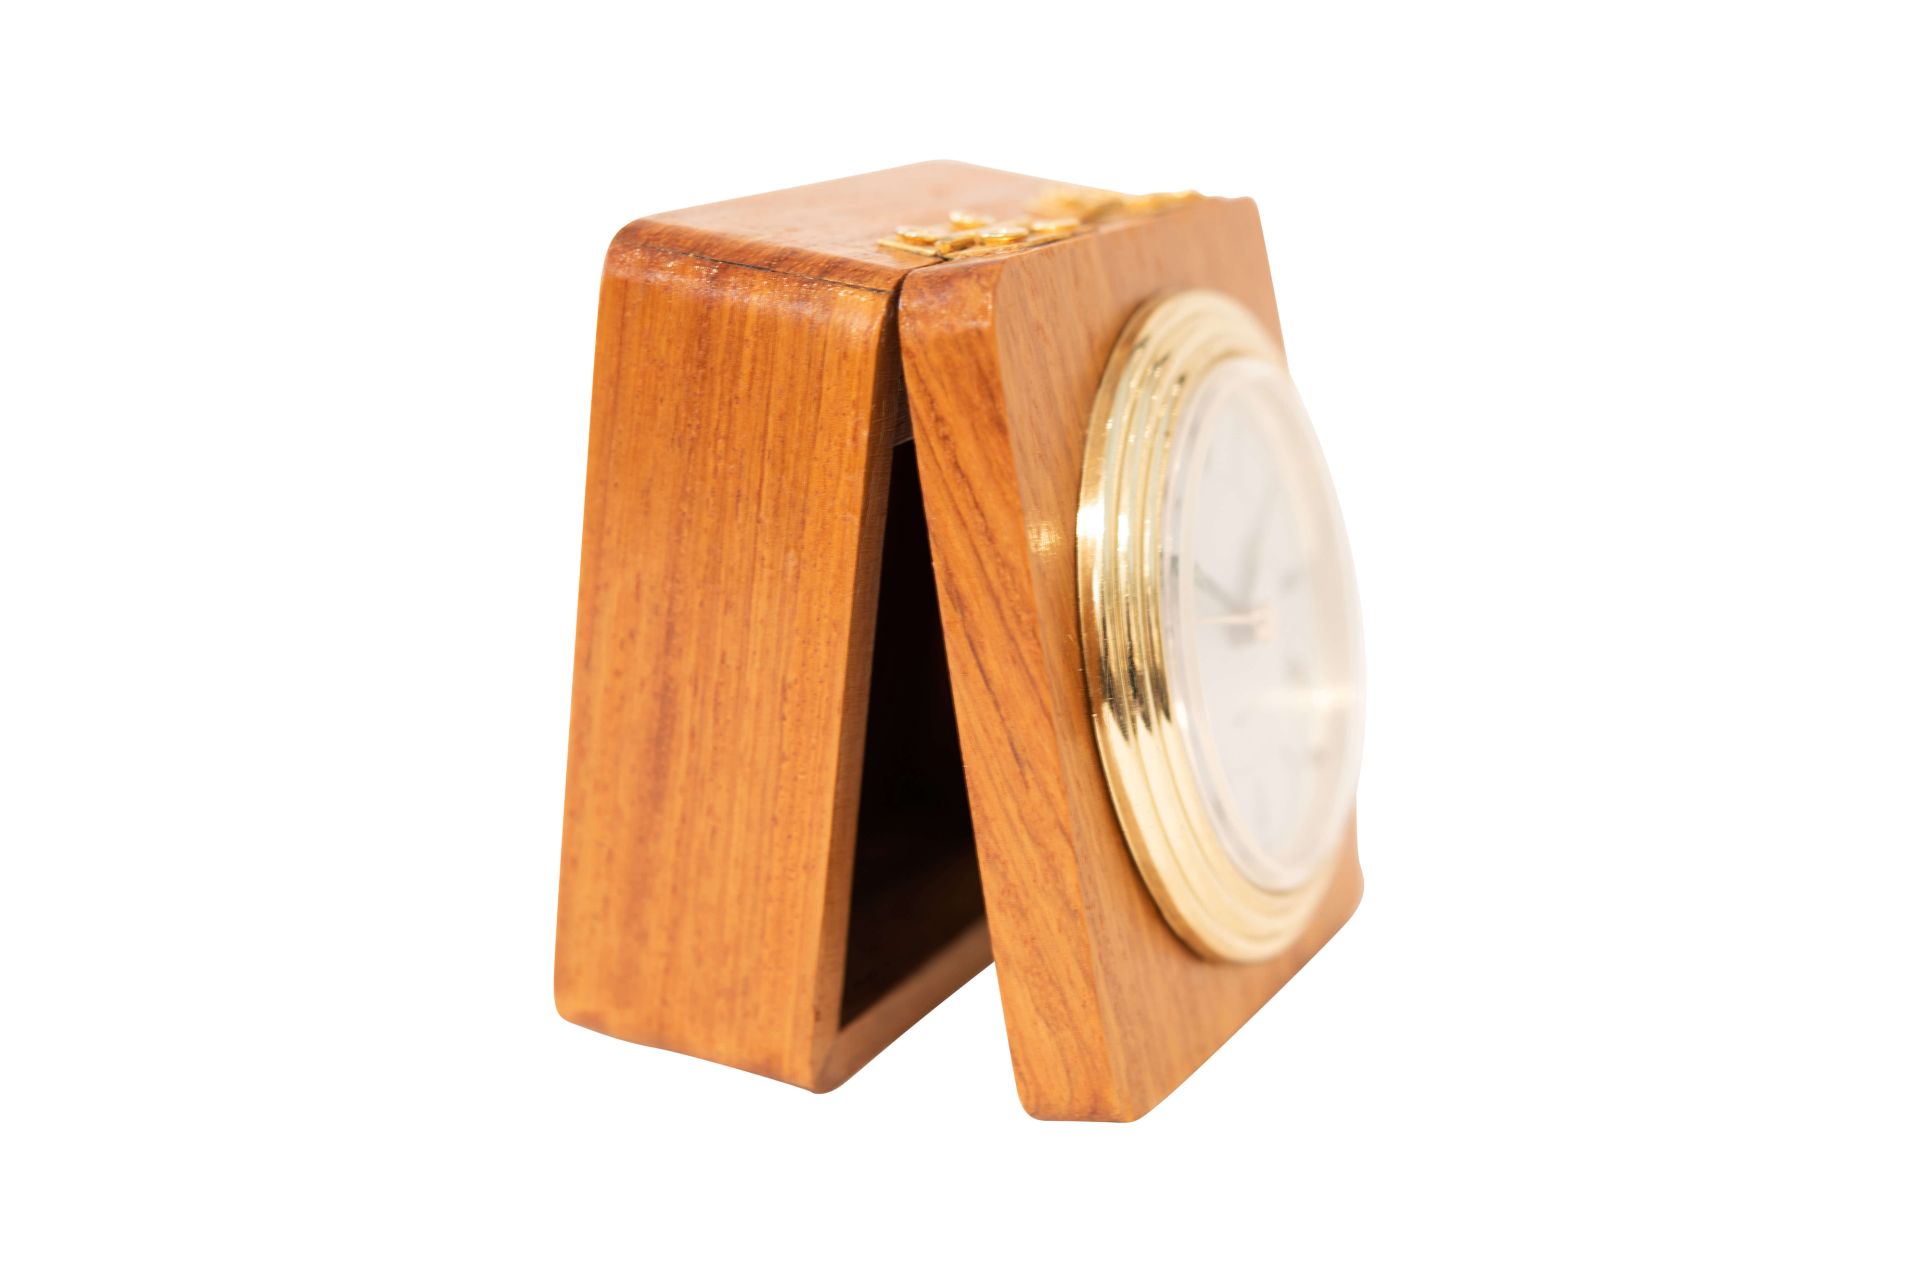 Quarz Uhr in Holz Schatulle ohne Batterie | Quartz Clock in Wooden Box, without Battery - Bild 5 aus 5